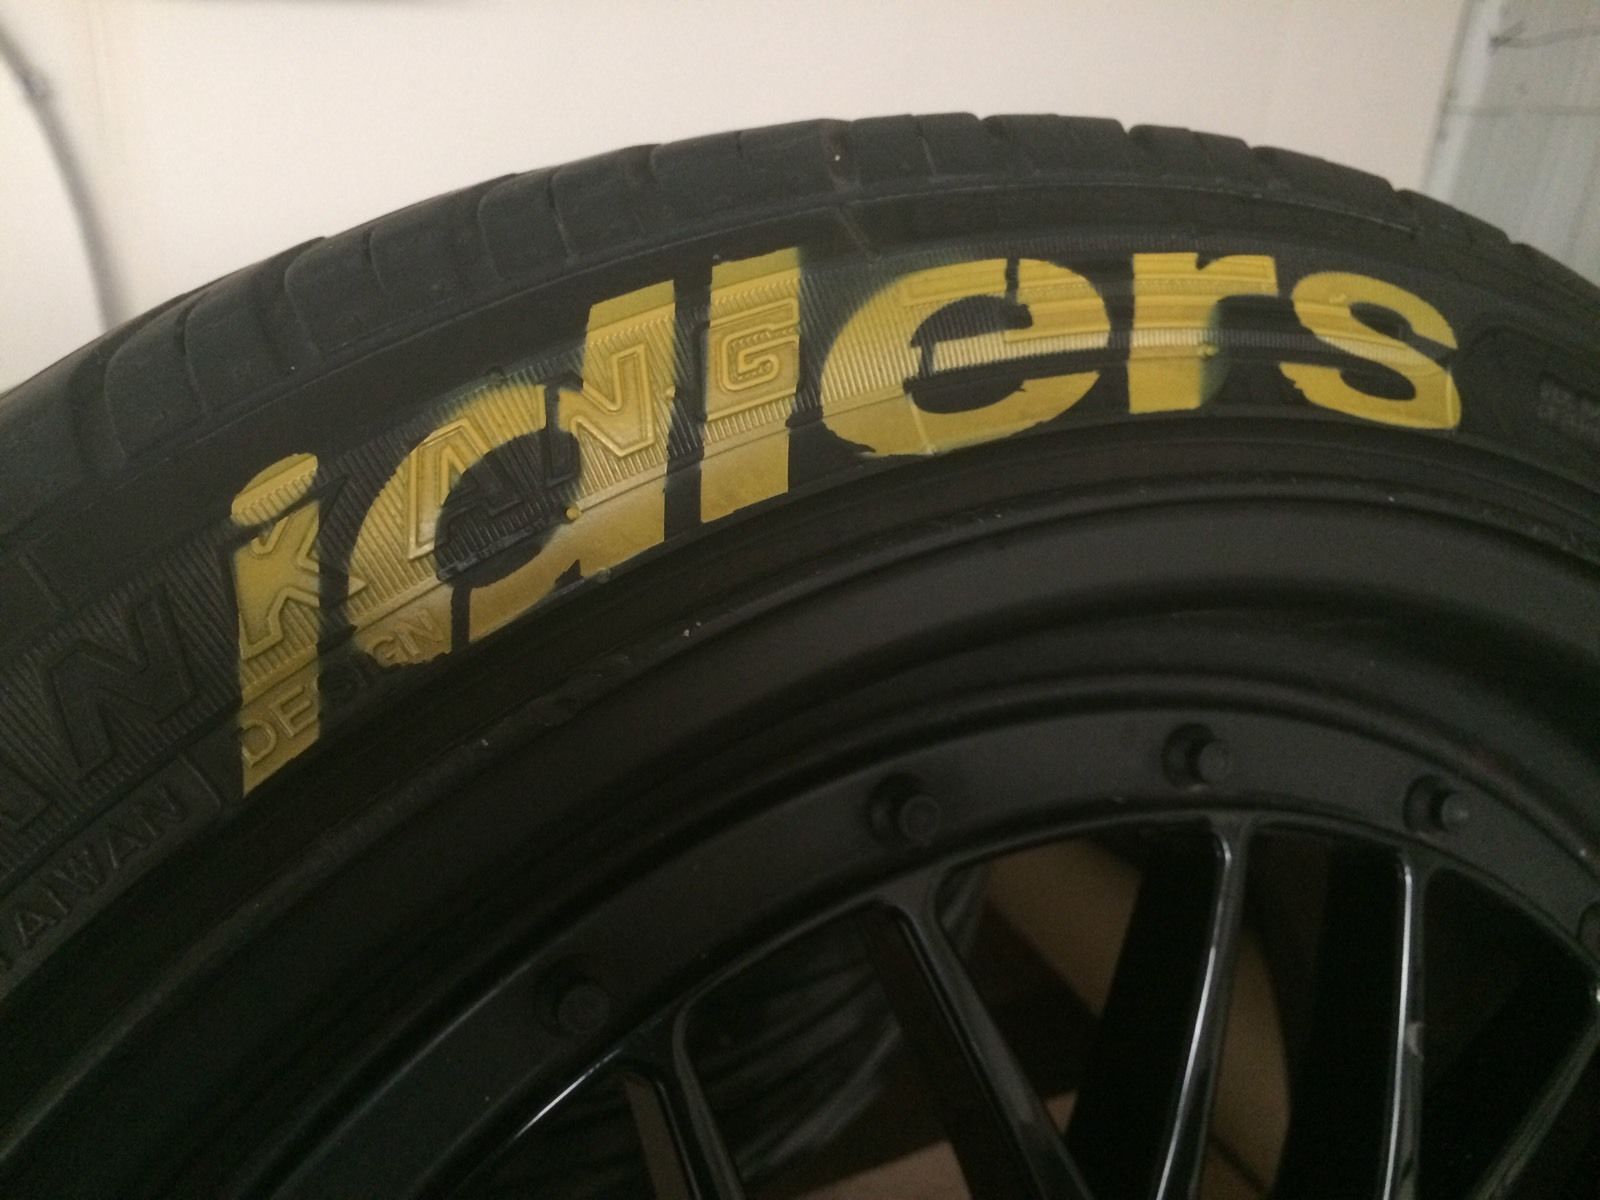 15/" Dunlop Tire Stencil For Paint Falken Kumho Michellin Bridgestone Toyo More